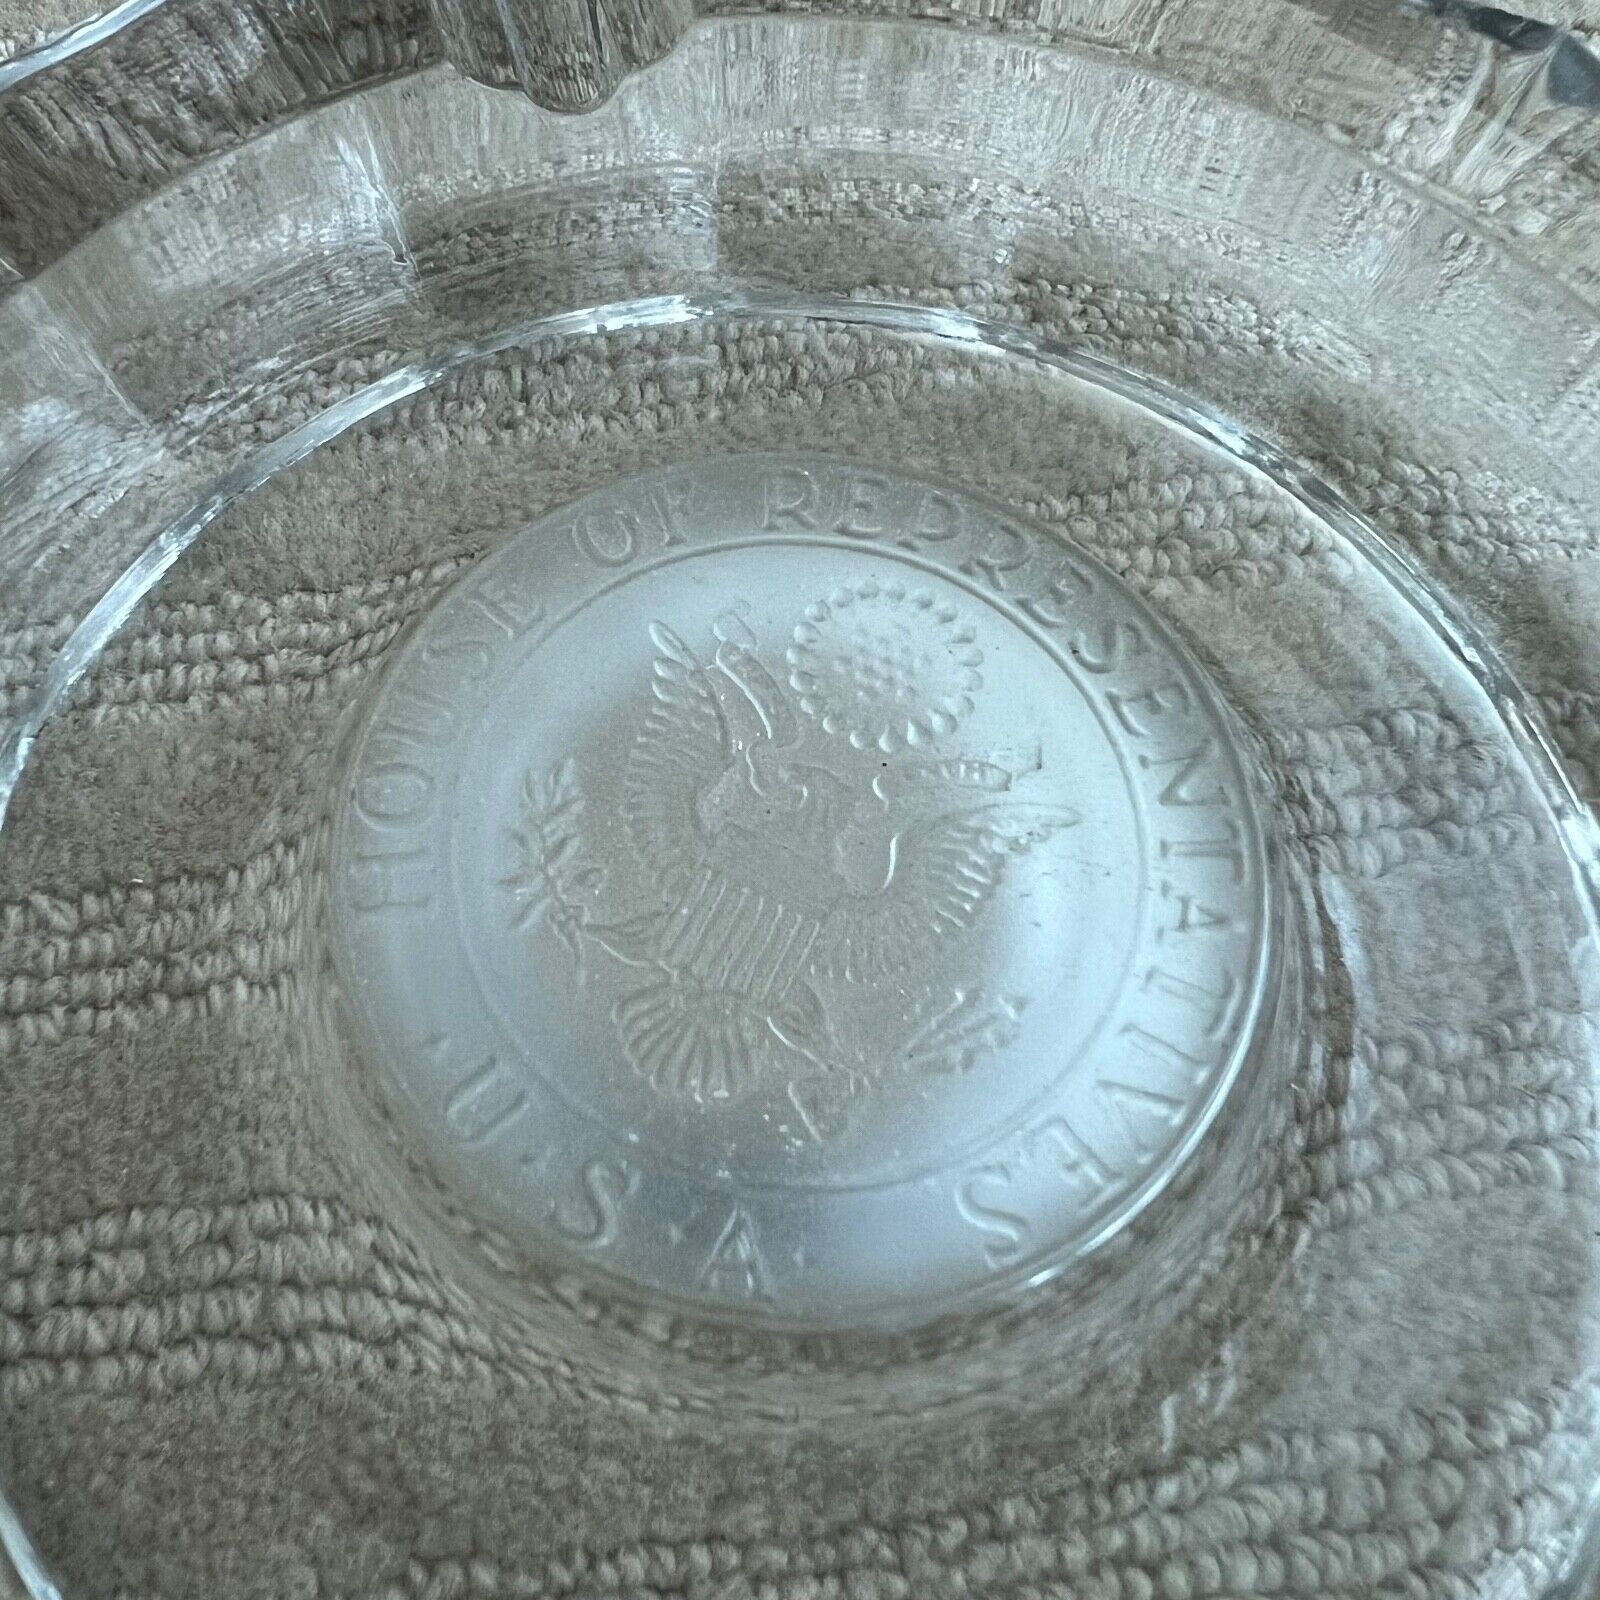 House of Representatives Official USA glass ashtray, 7.5" round, vintage Без бренда - фотография #4